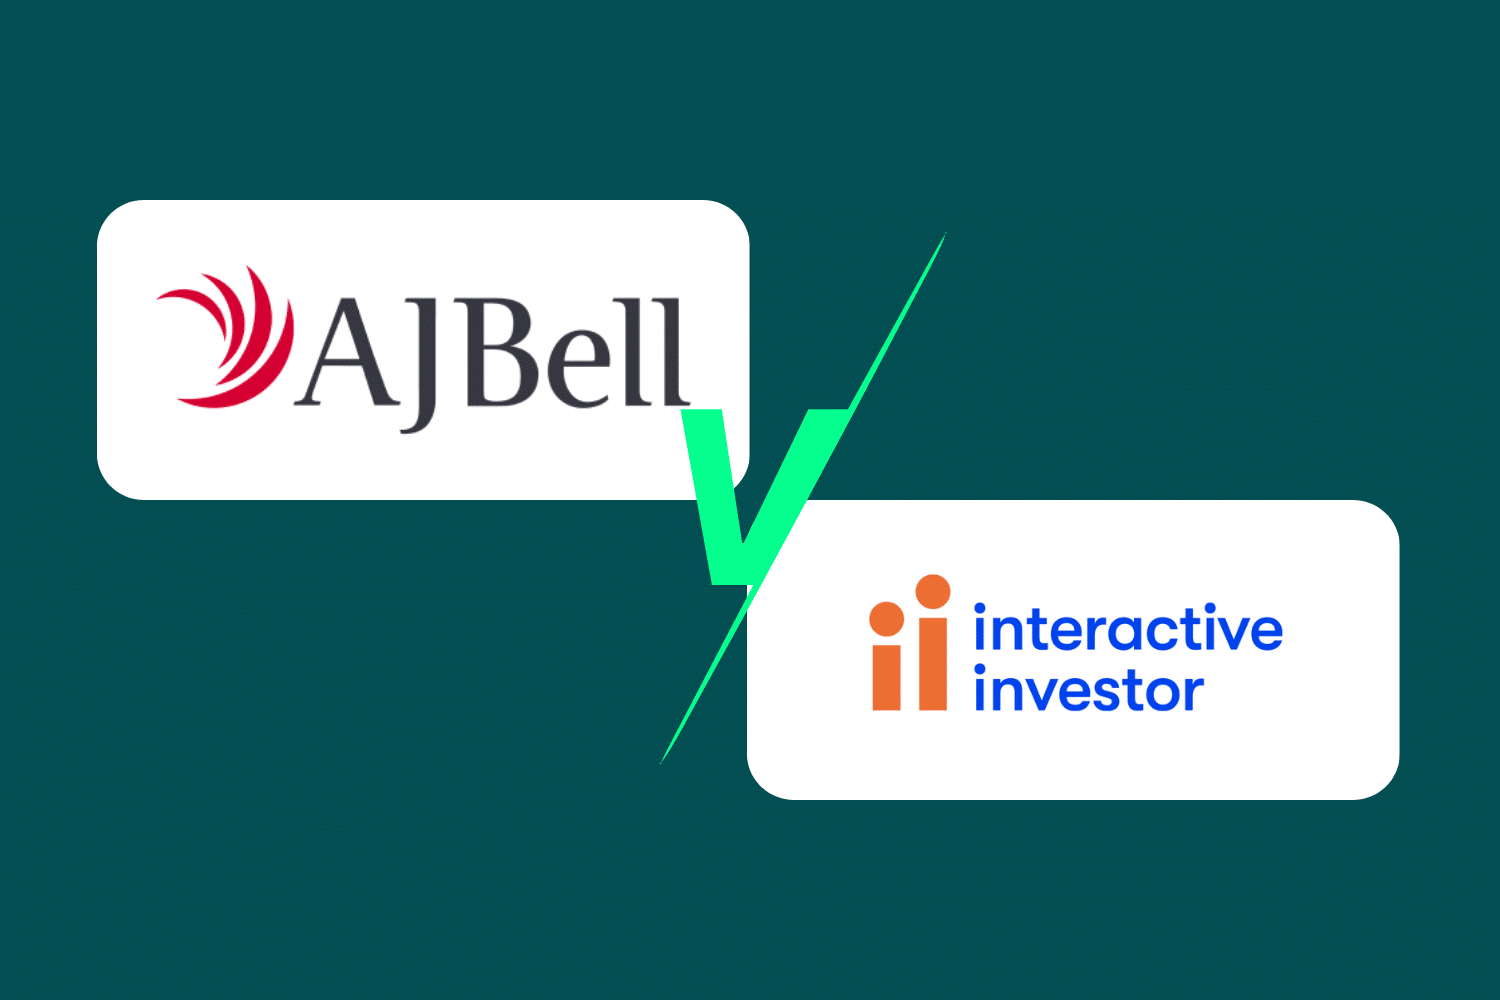 aj bell v interactive investor